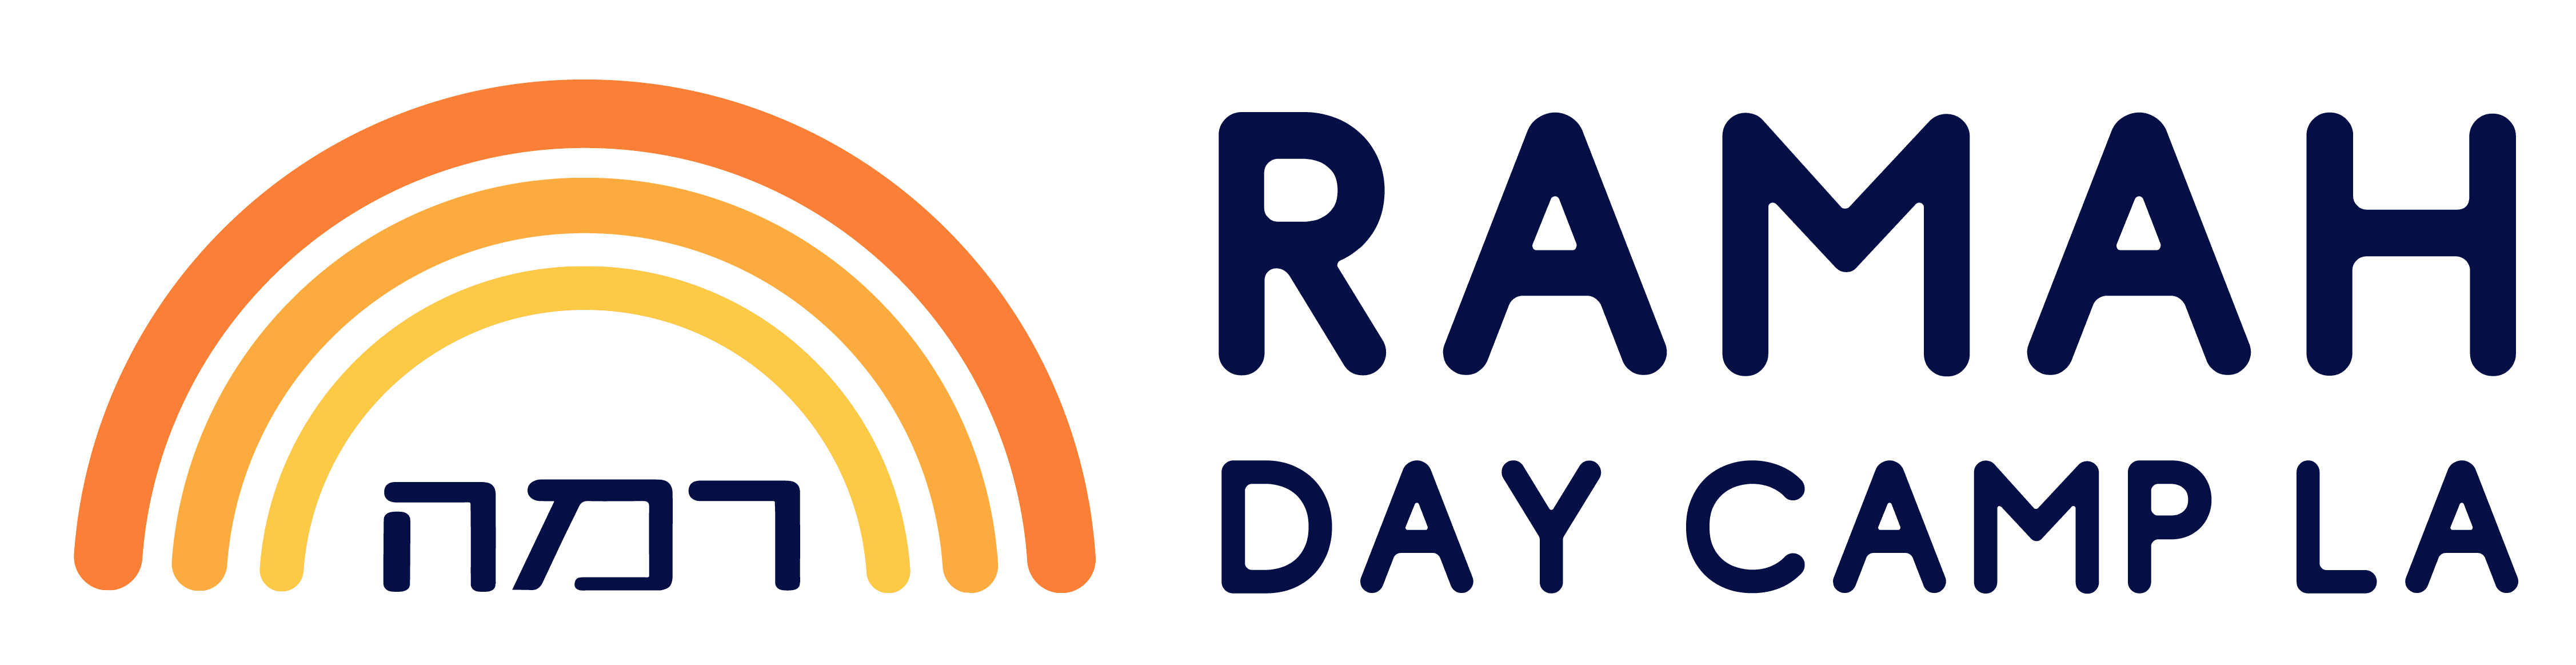 Ramah Day Camp LA Logo Secondary Color